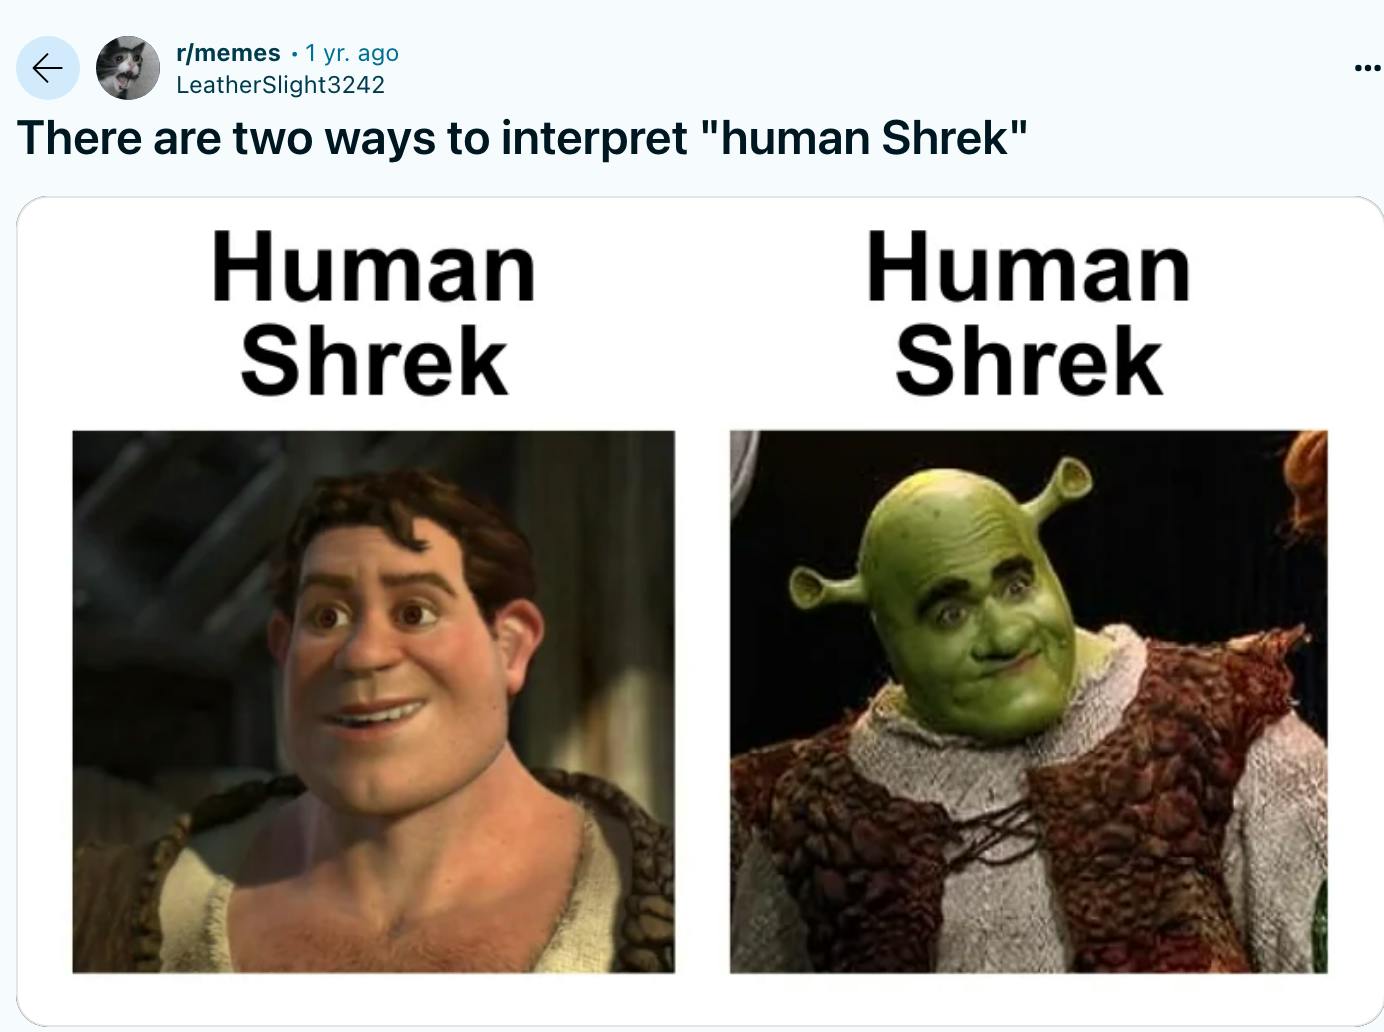 Reddit post by LeatehrSlight324 of Human-Shrek